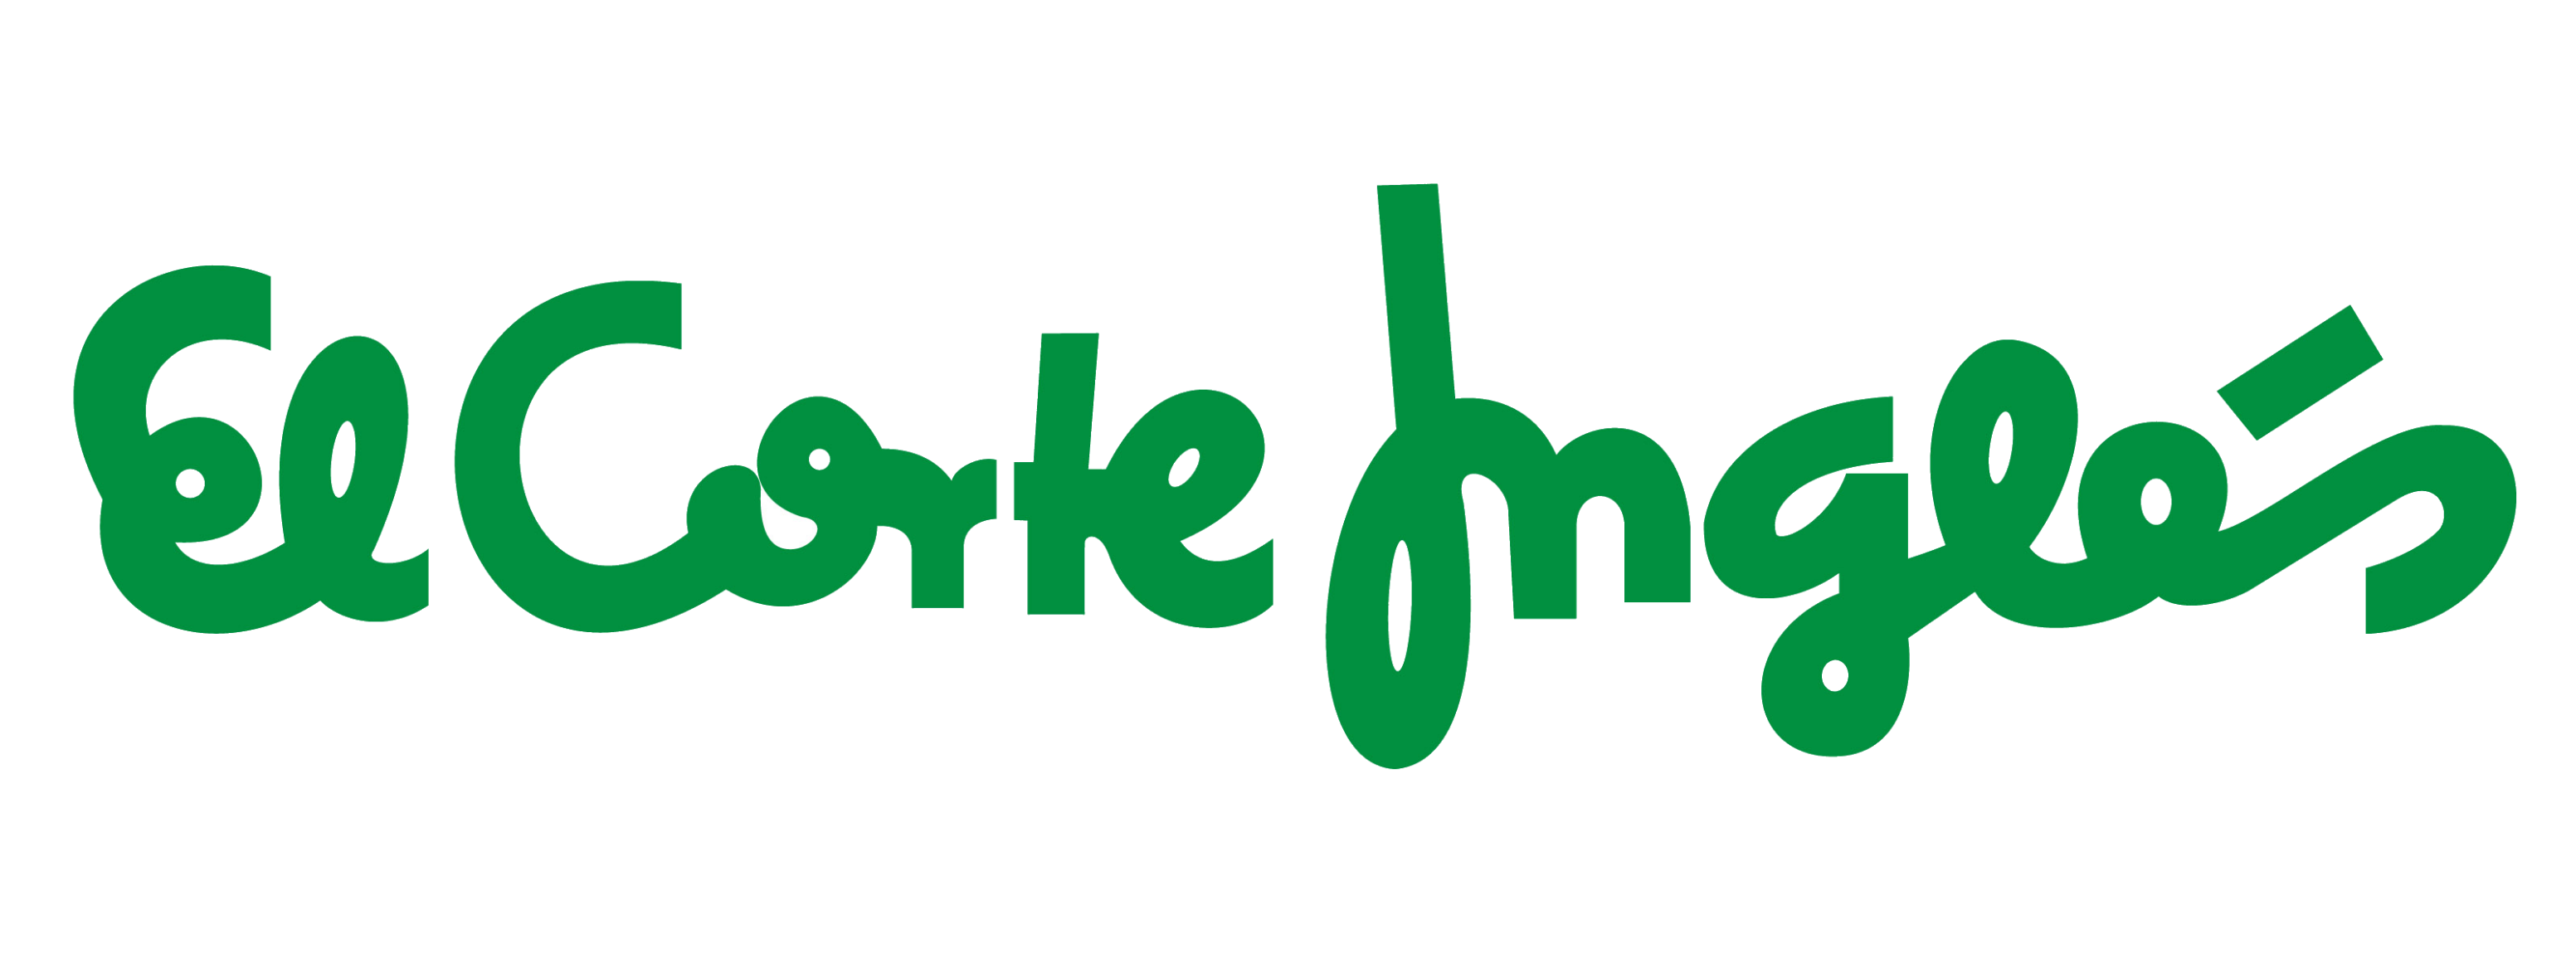 Logo-ElCorteIngles.png